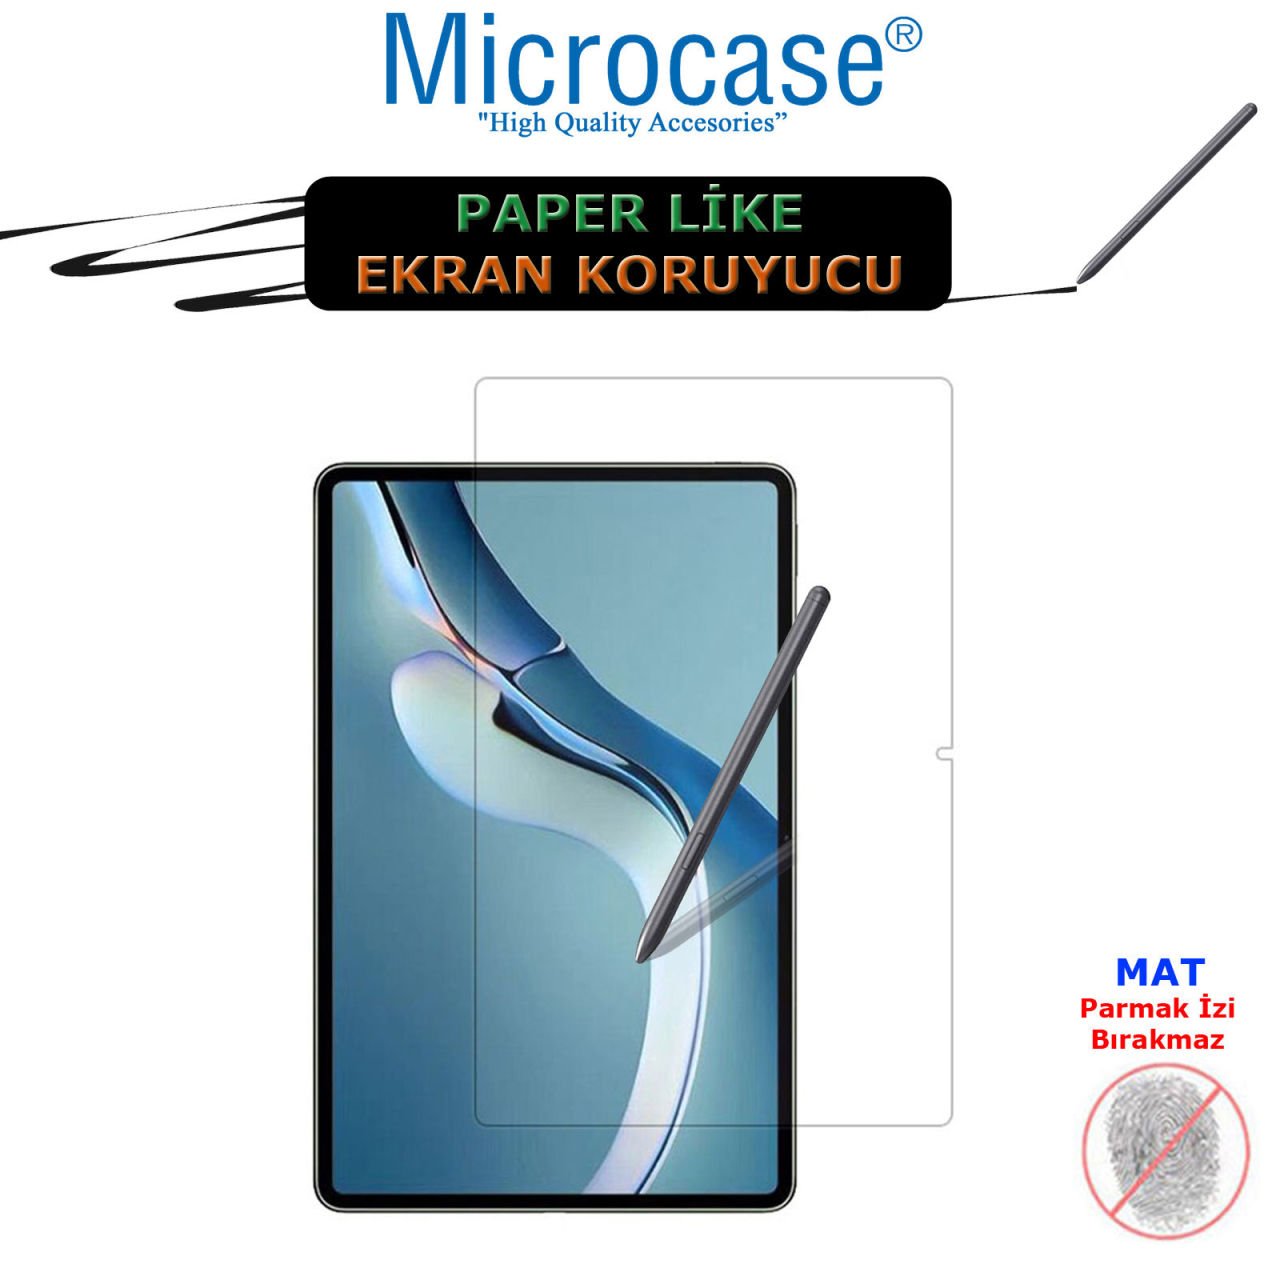 Microcase Huawei Matepad Pro 12.6 2021 Paper Like Pencil Destekli Kağıt Hissi Veren Mat Ekran Filmi